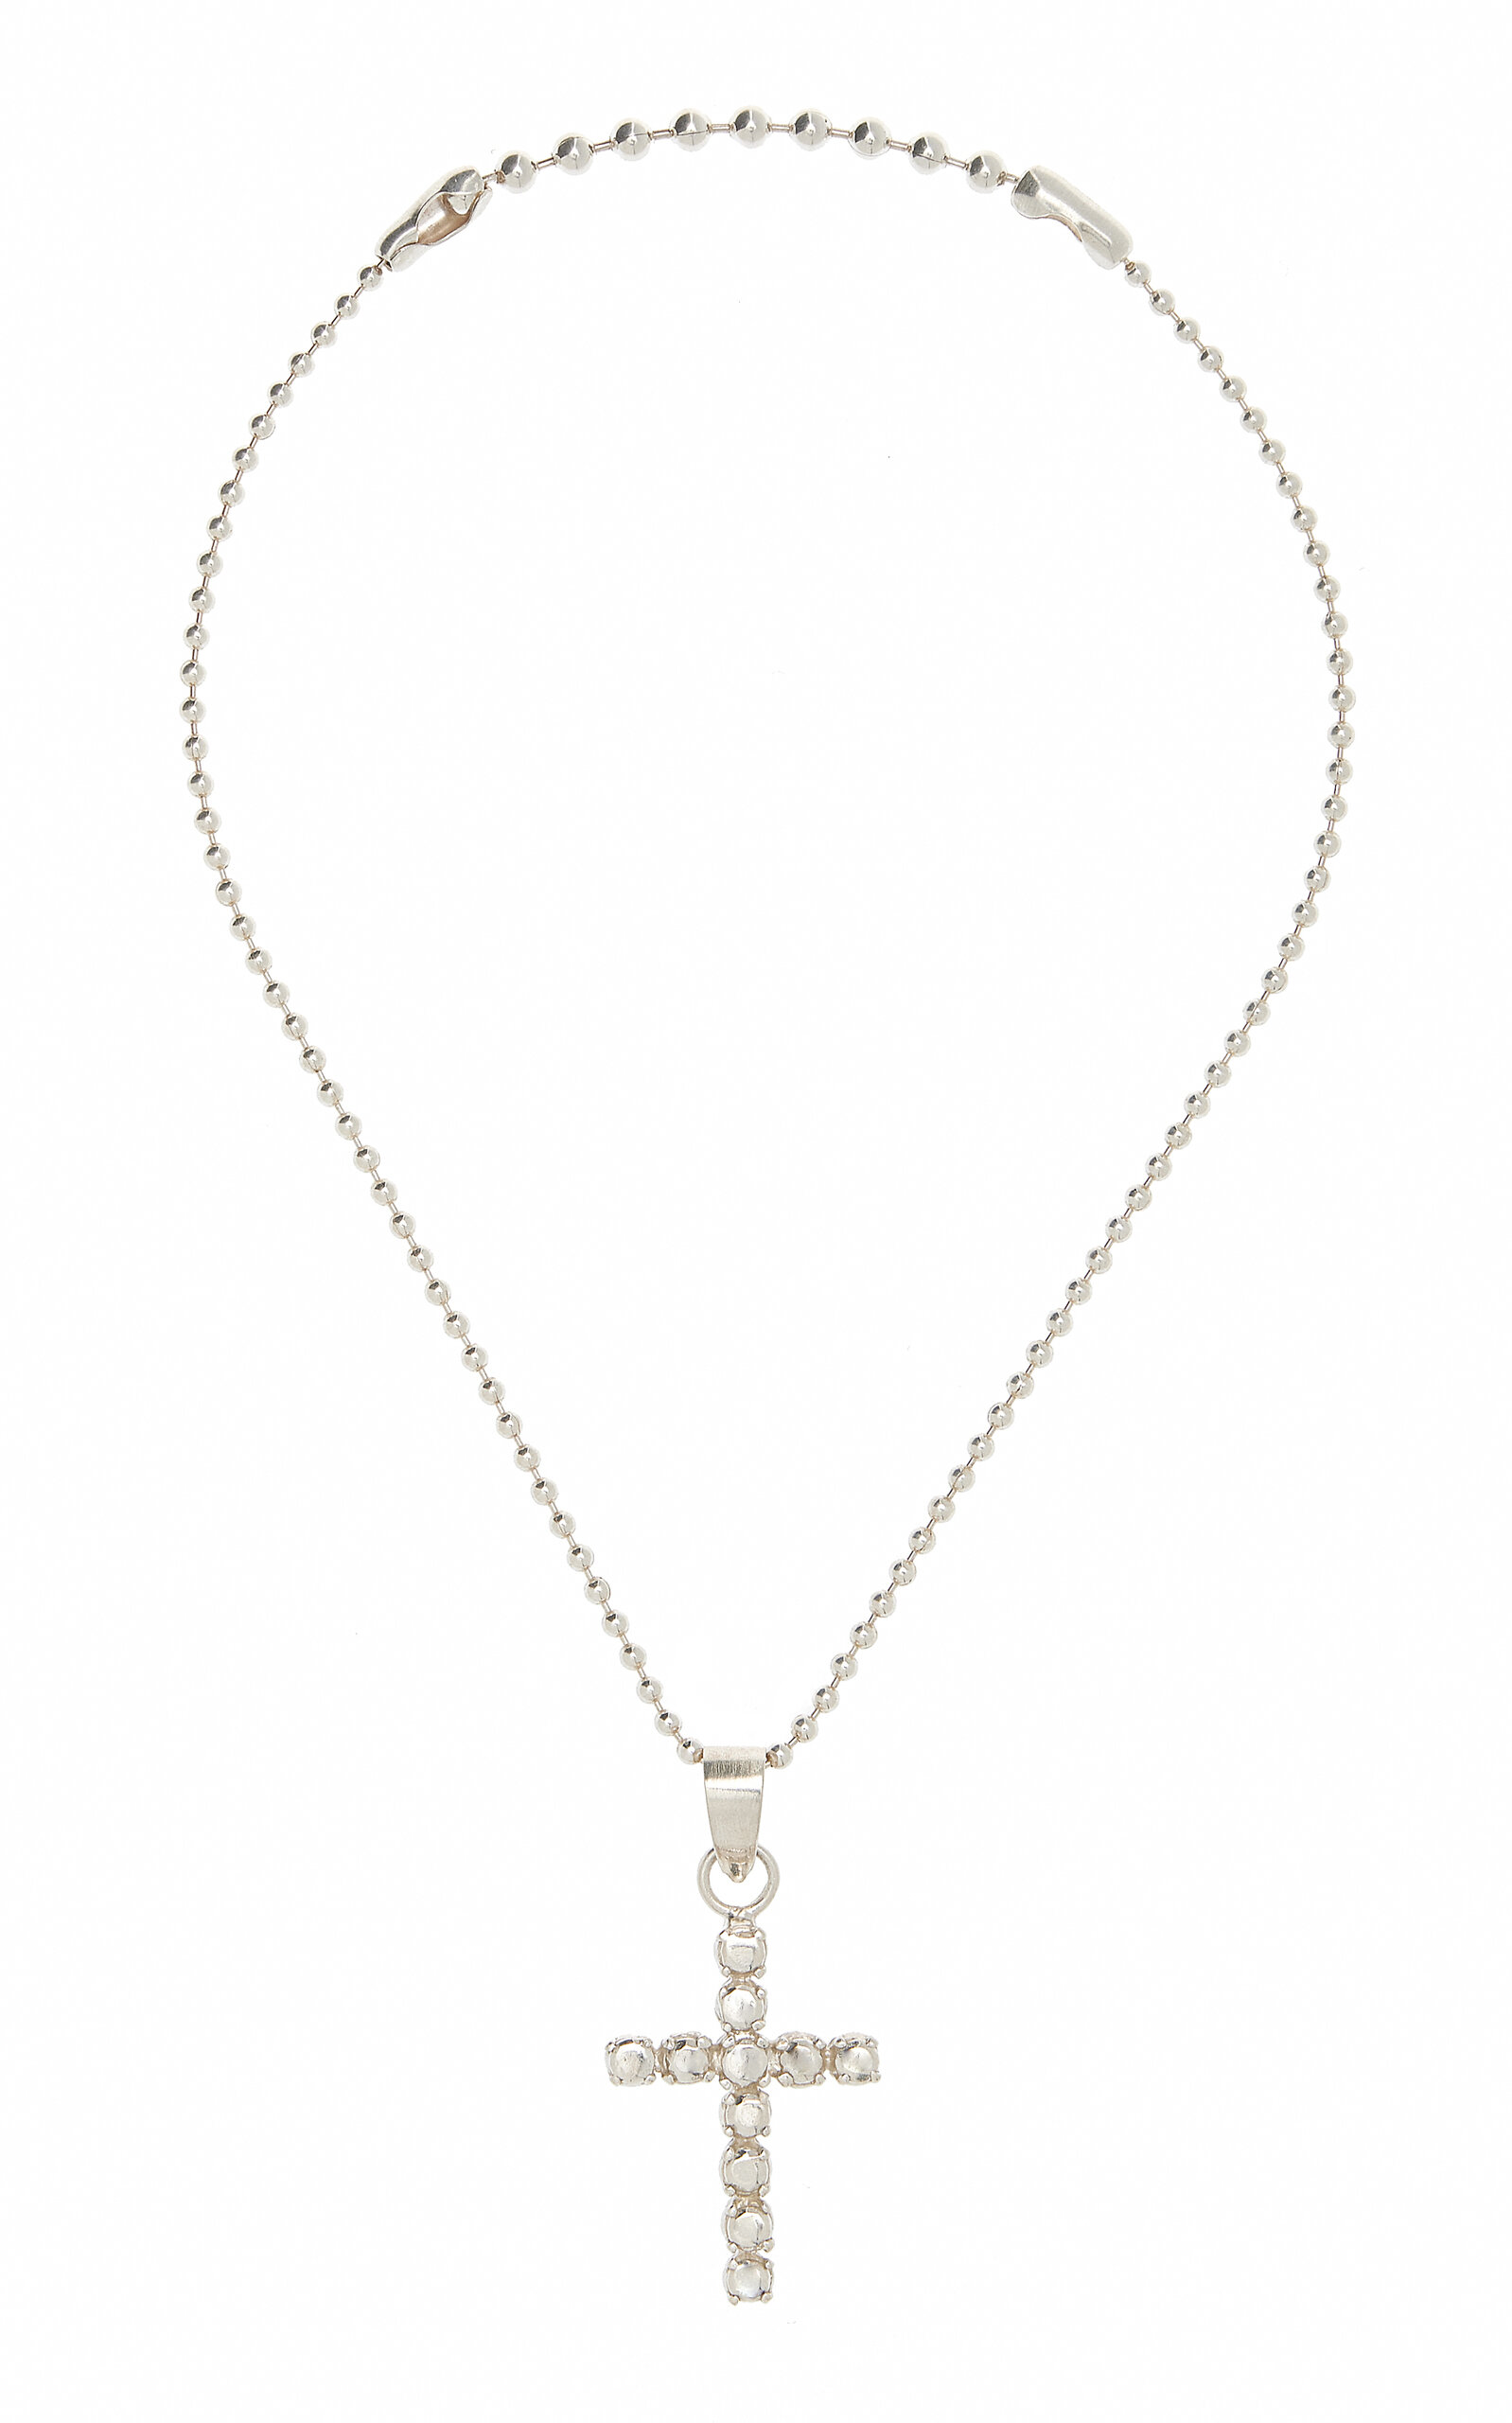 Martine Ali Women's Exclusive Stone Sterling Silver Necklace